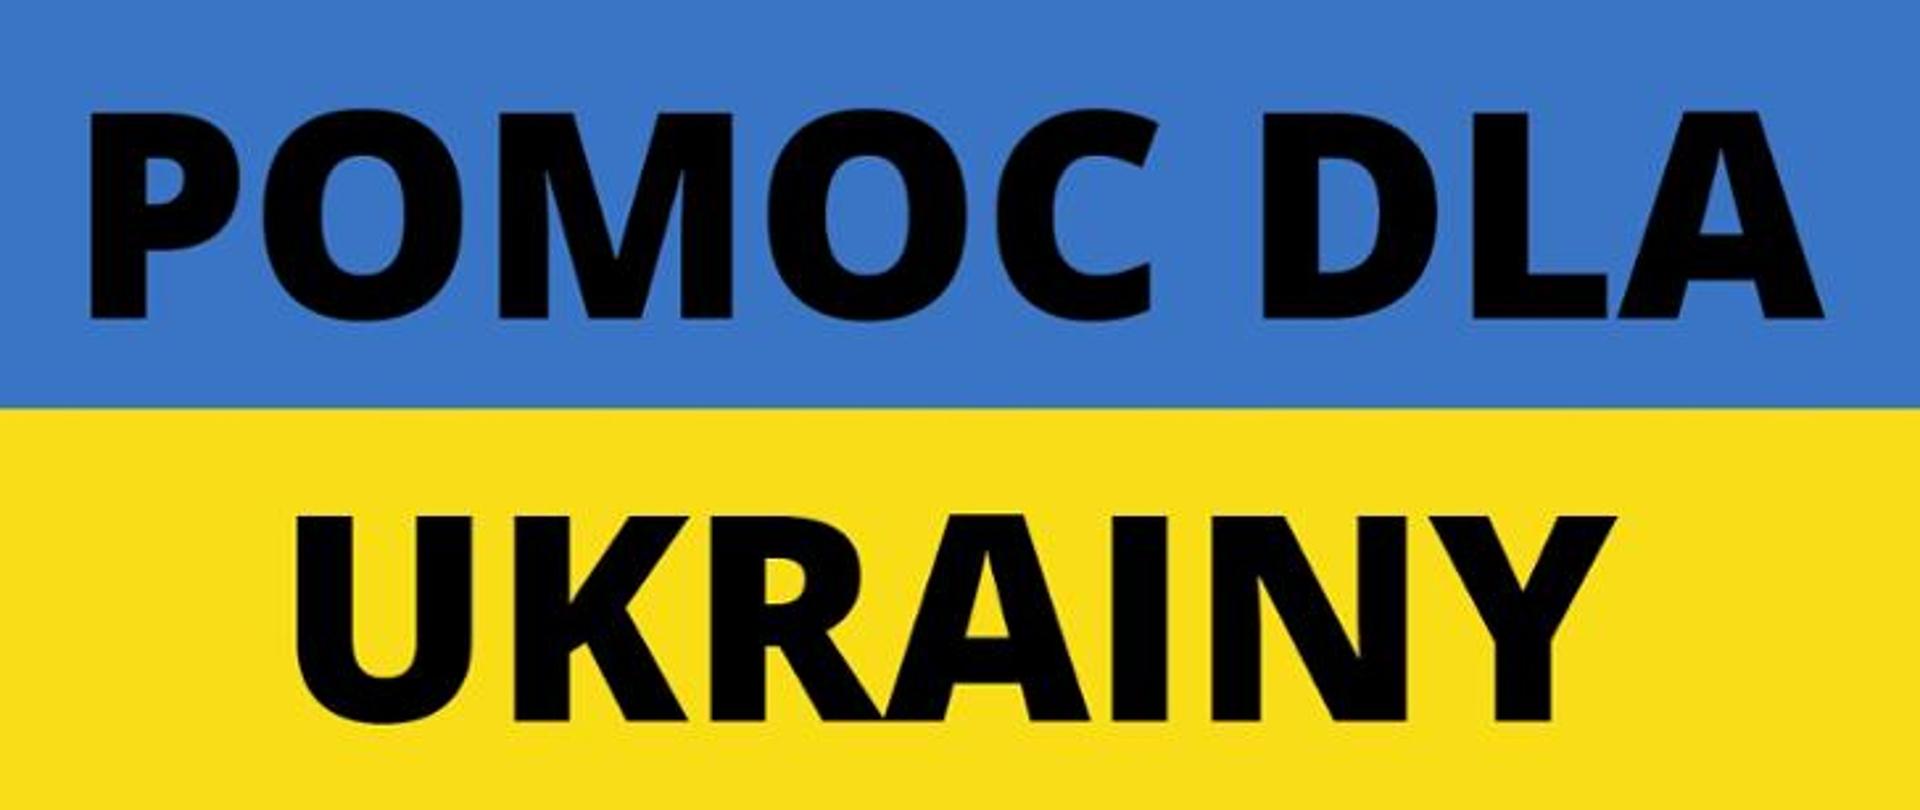 Ukraińska flaga z napisem na niej Pomoc dla Ukrainy